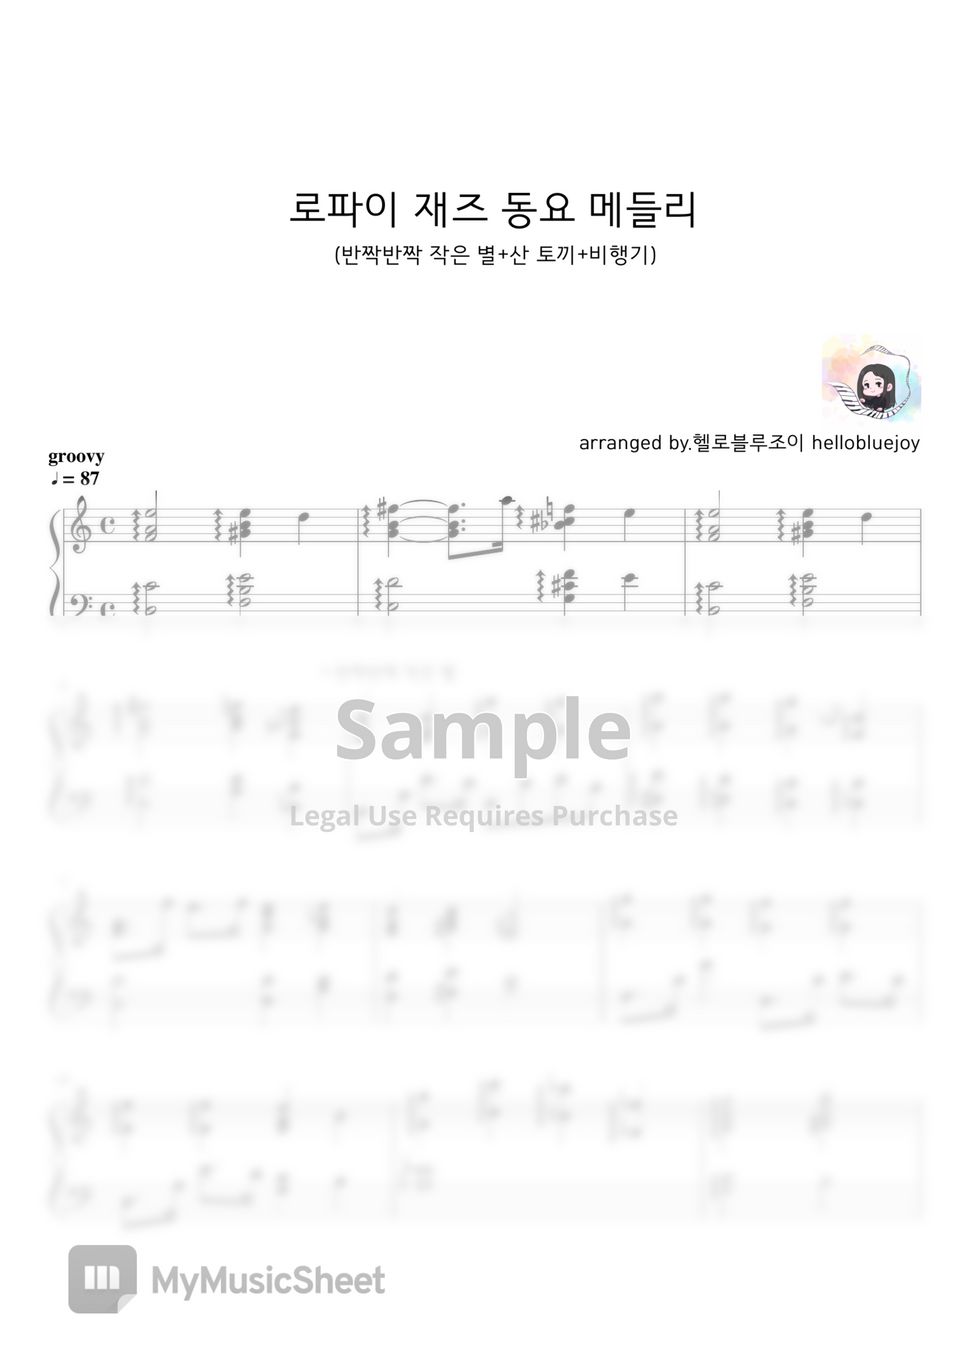 Unknown - Lofi Jazz Korea Kids song Medely (jazz ver.) by 헬로블루조이 hellobluejoy